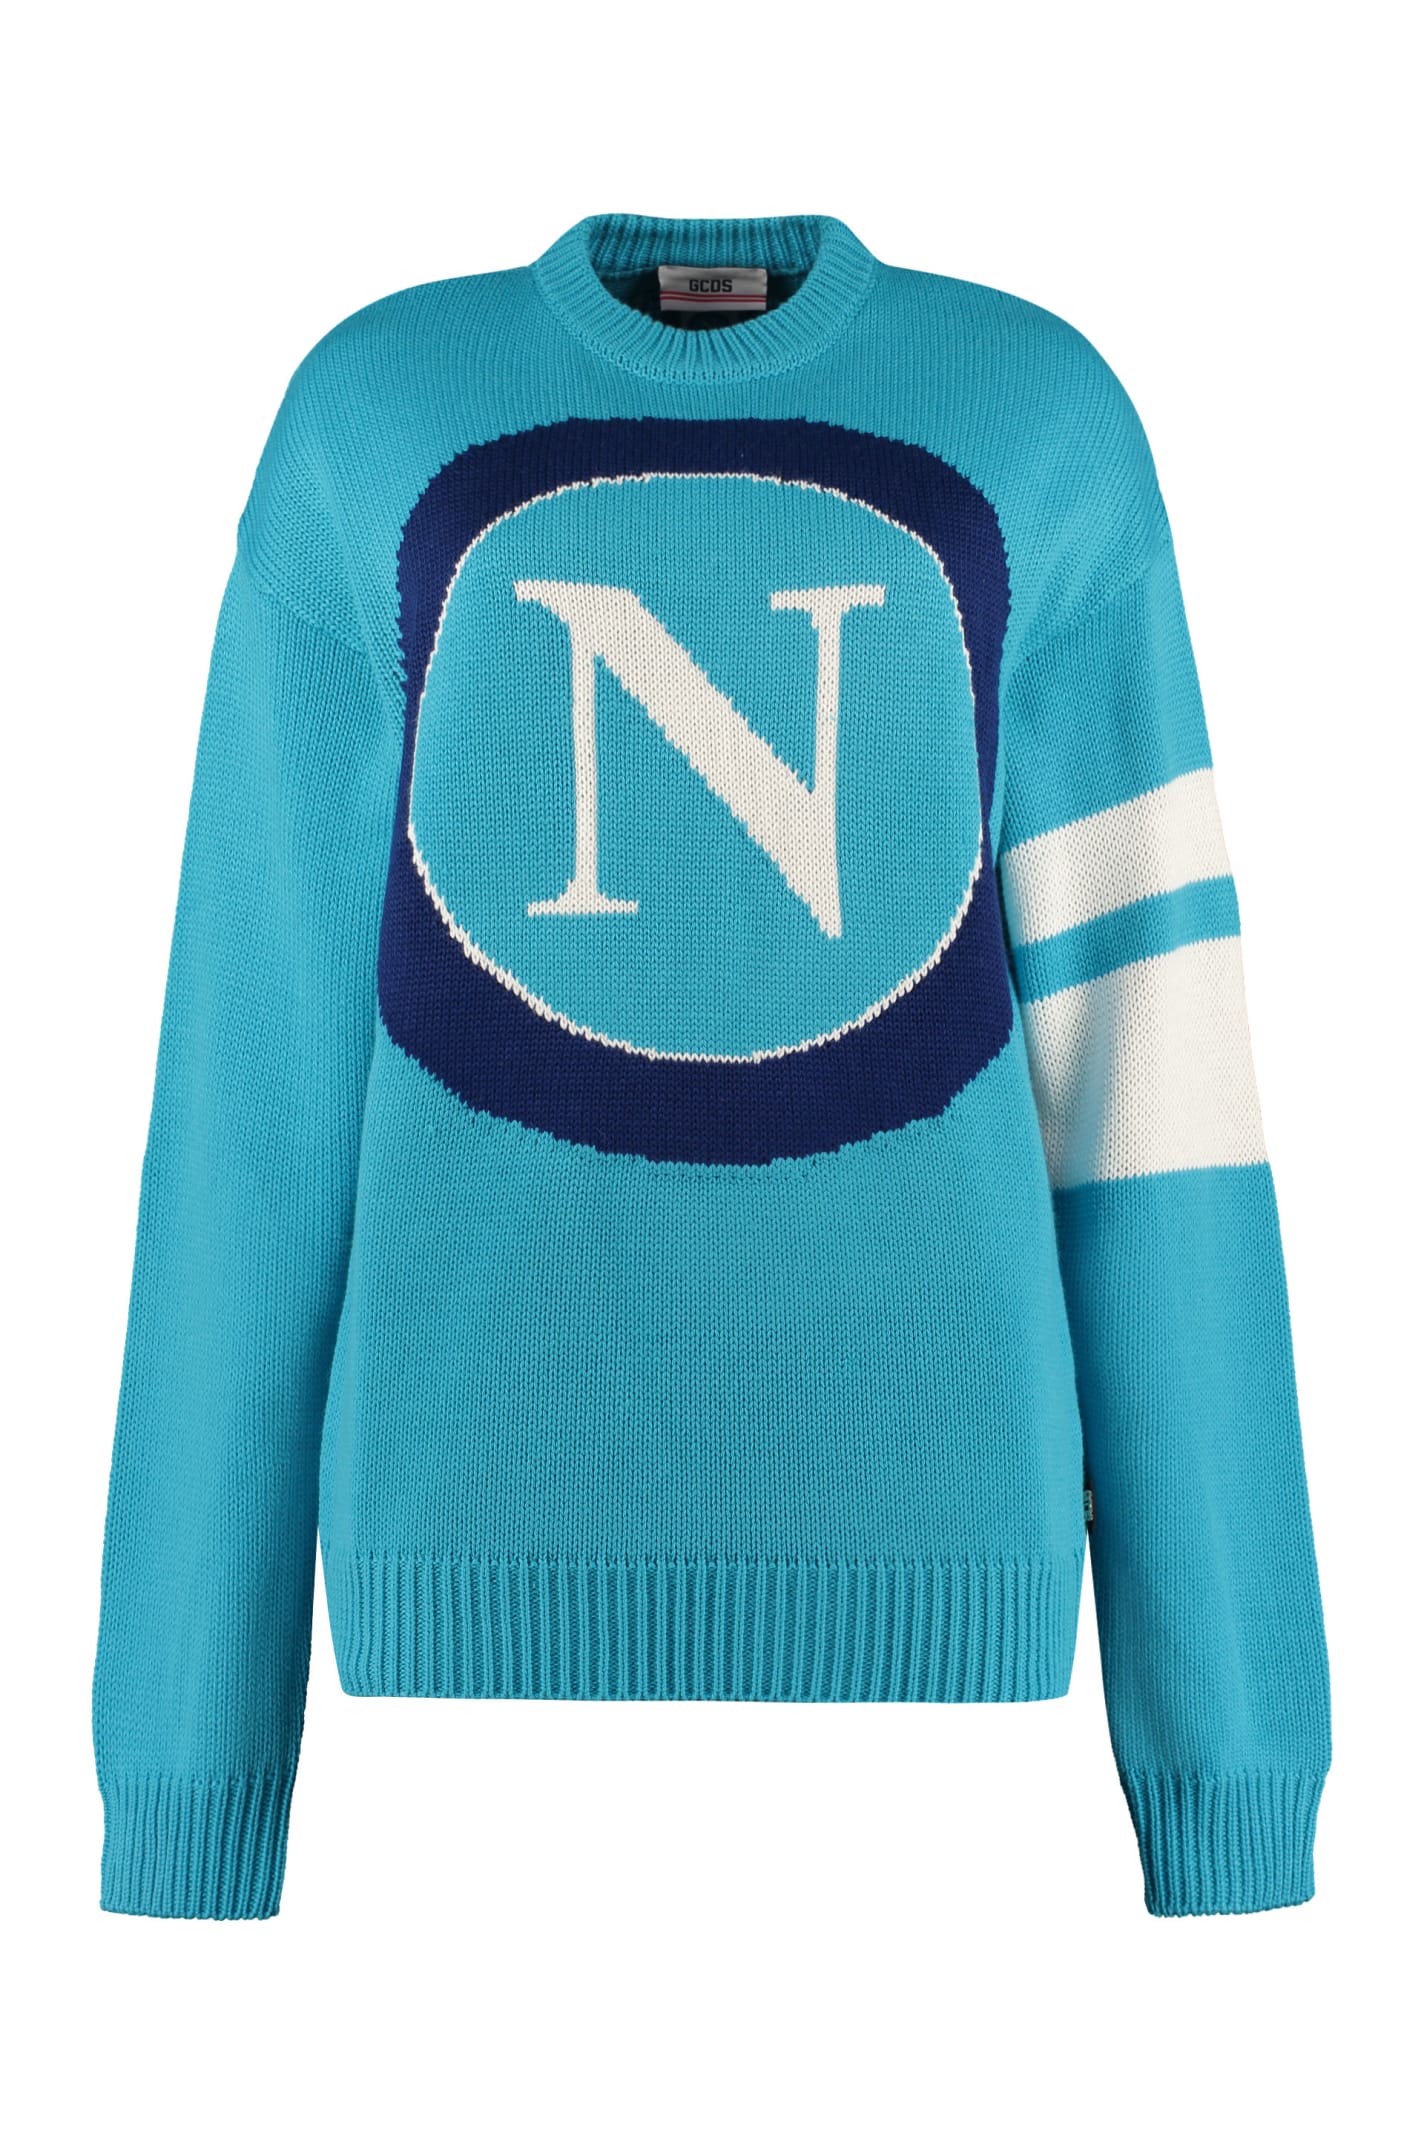 GCDS Ssc Napoli Intarsia Sweater